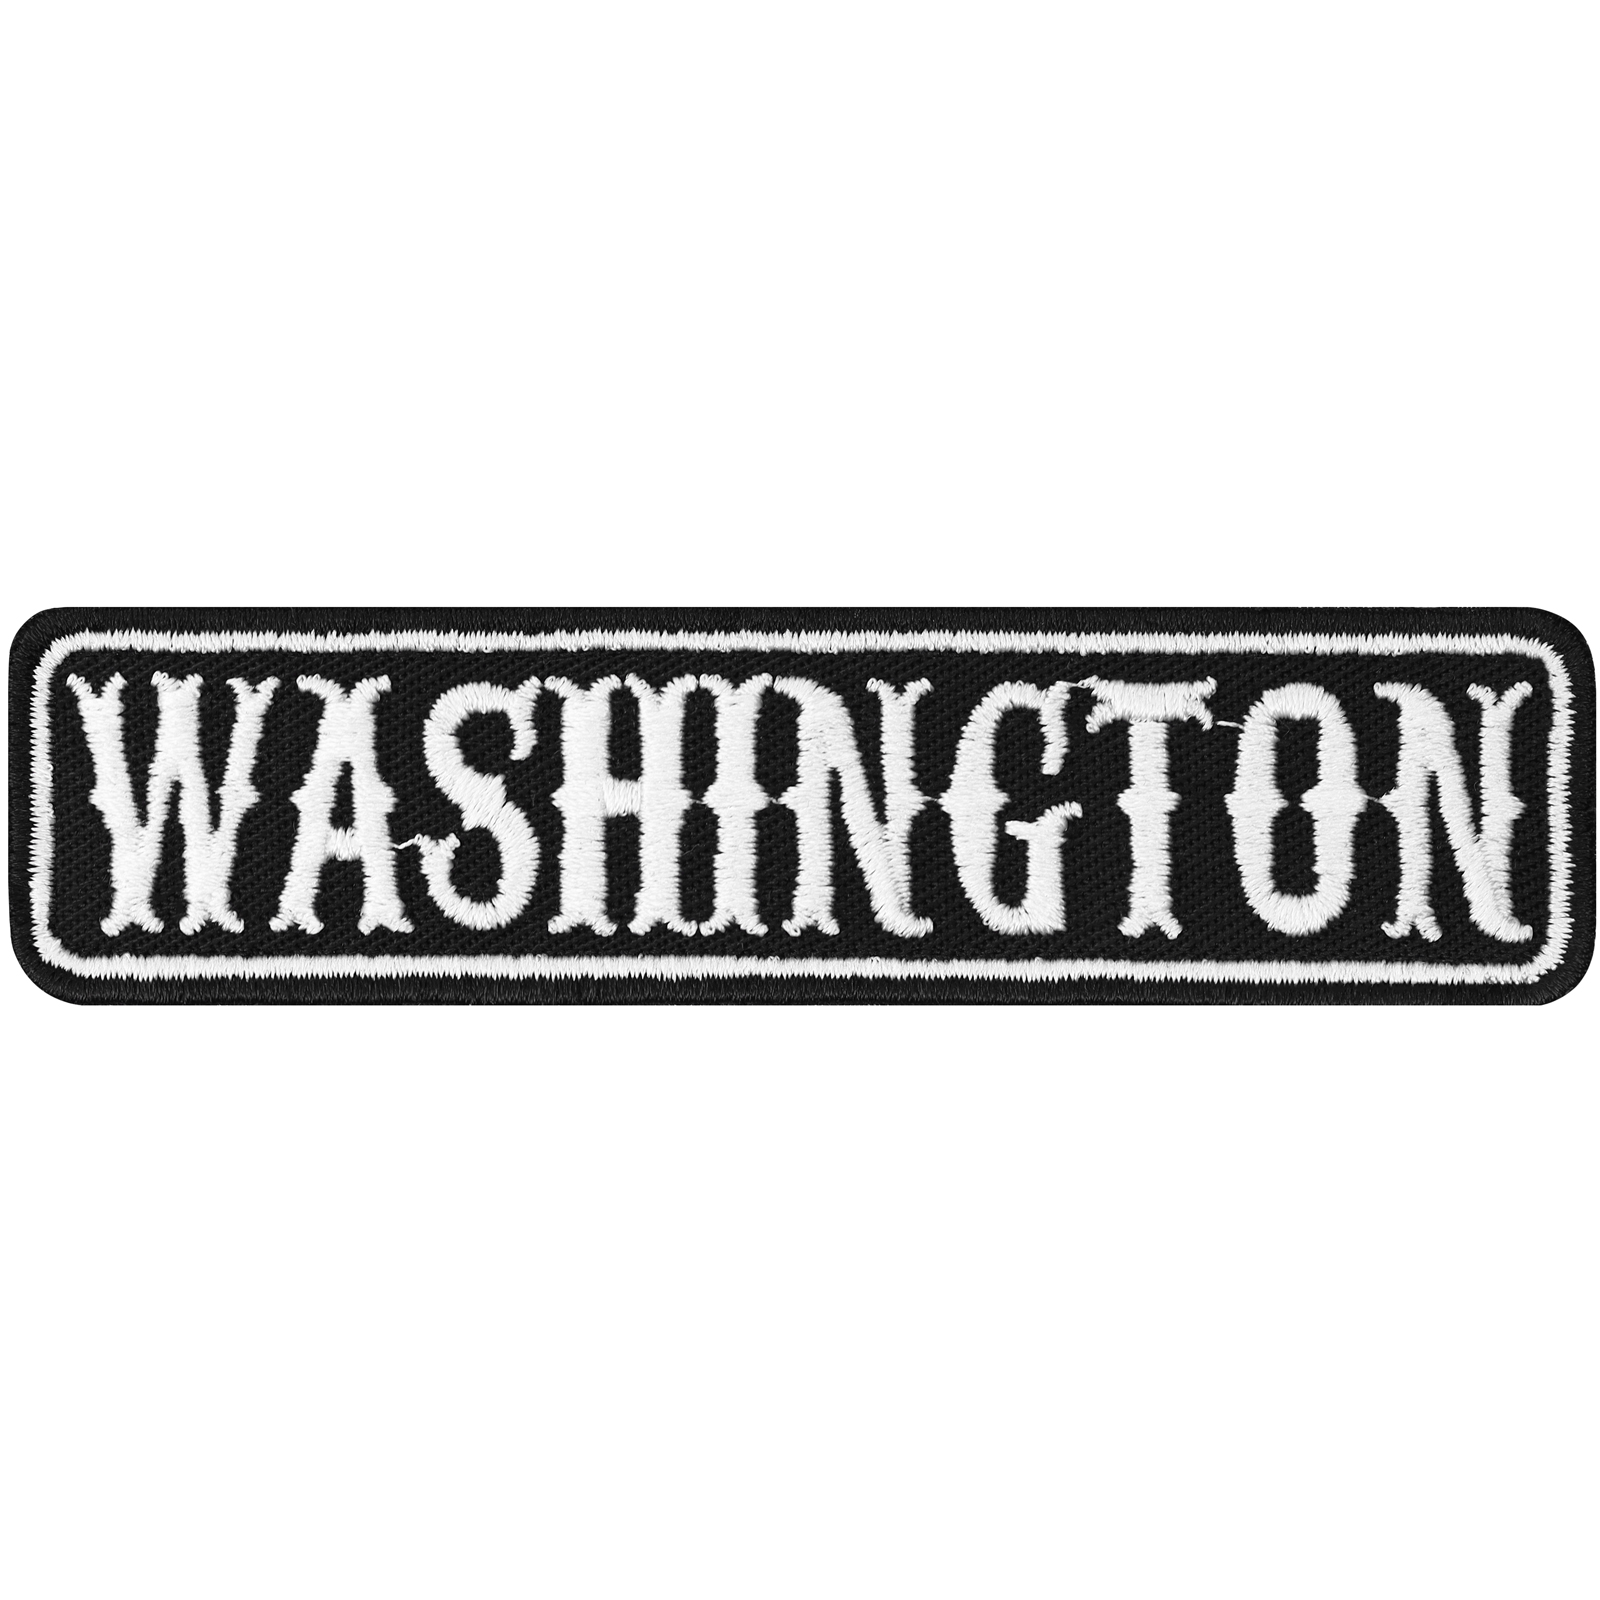 Washington - Patch